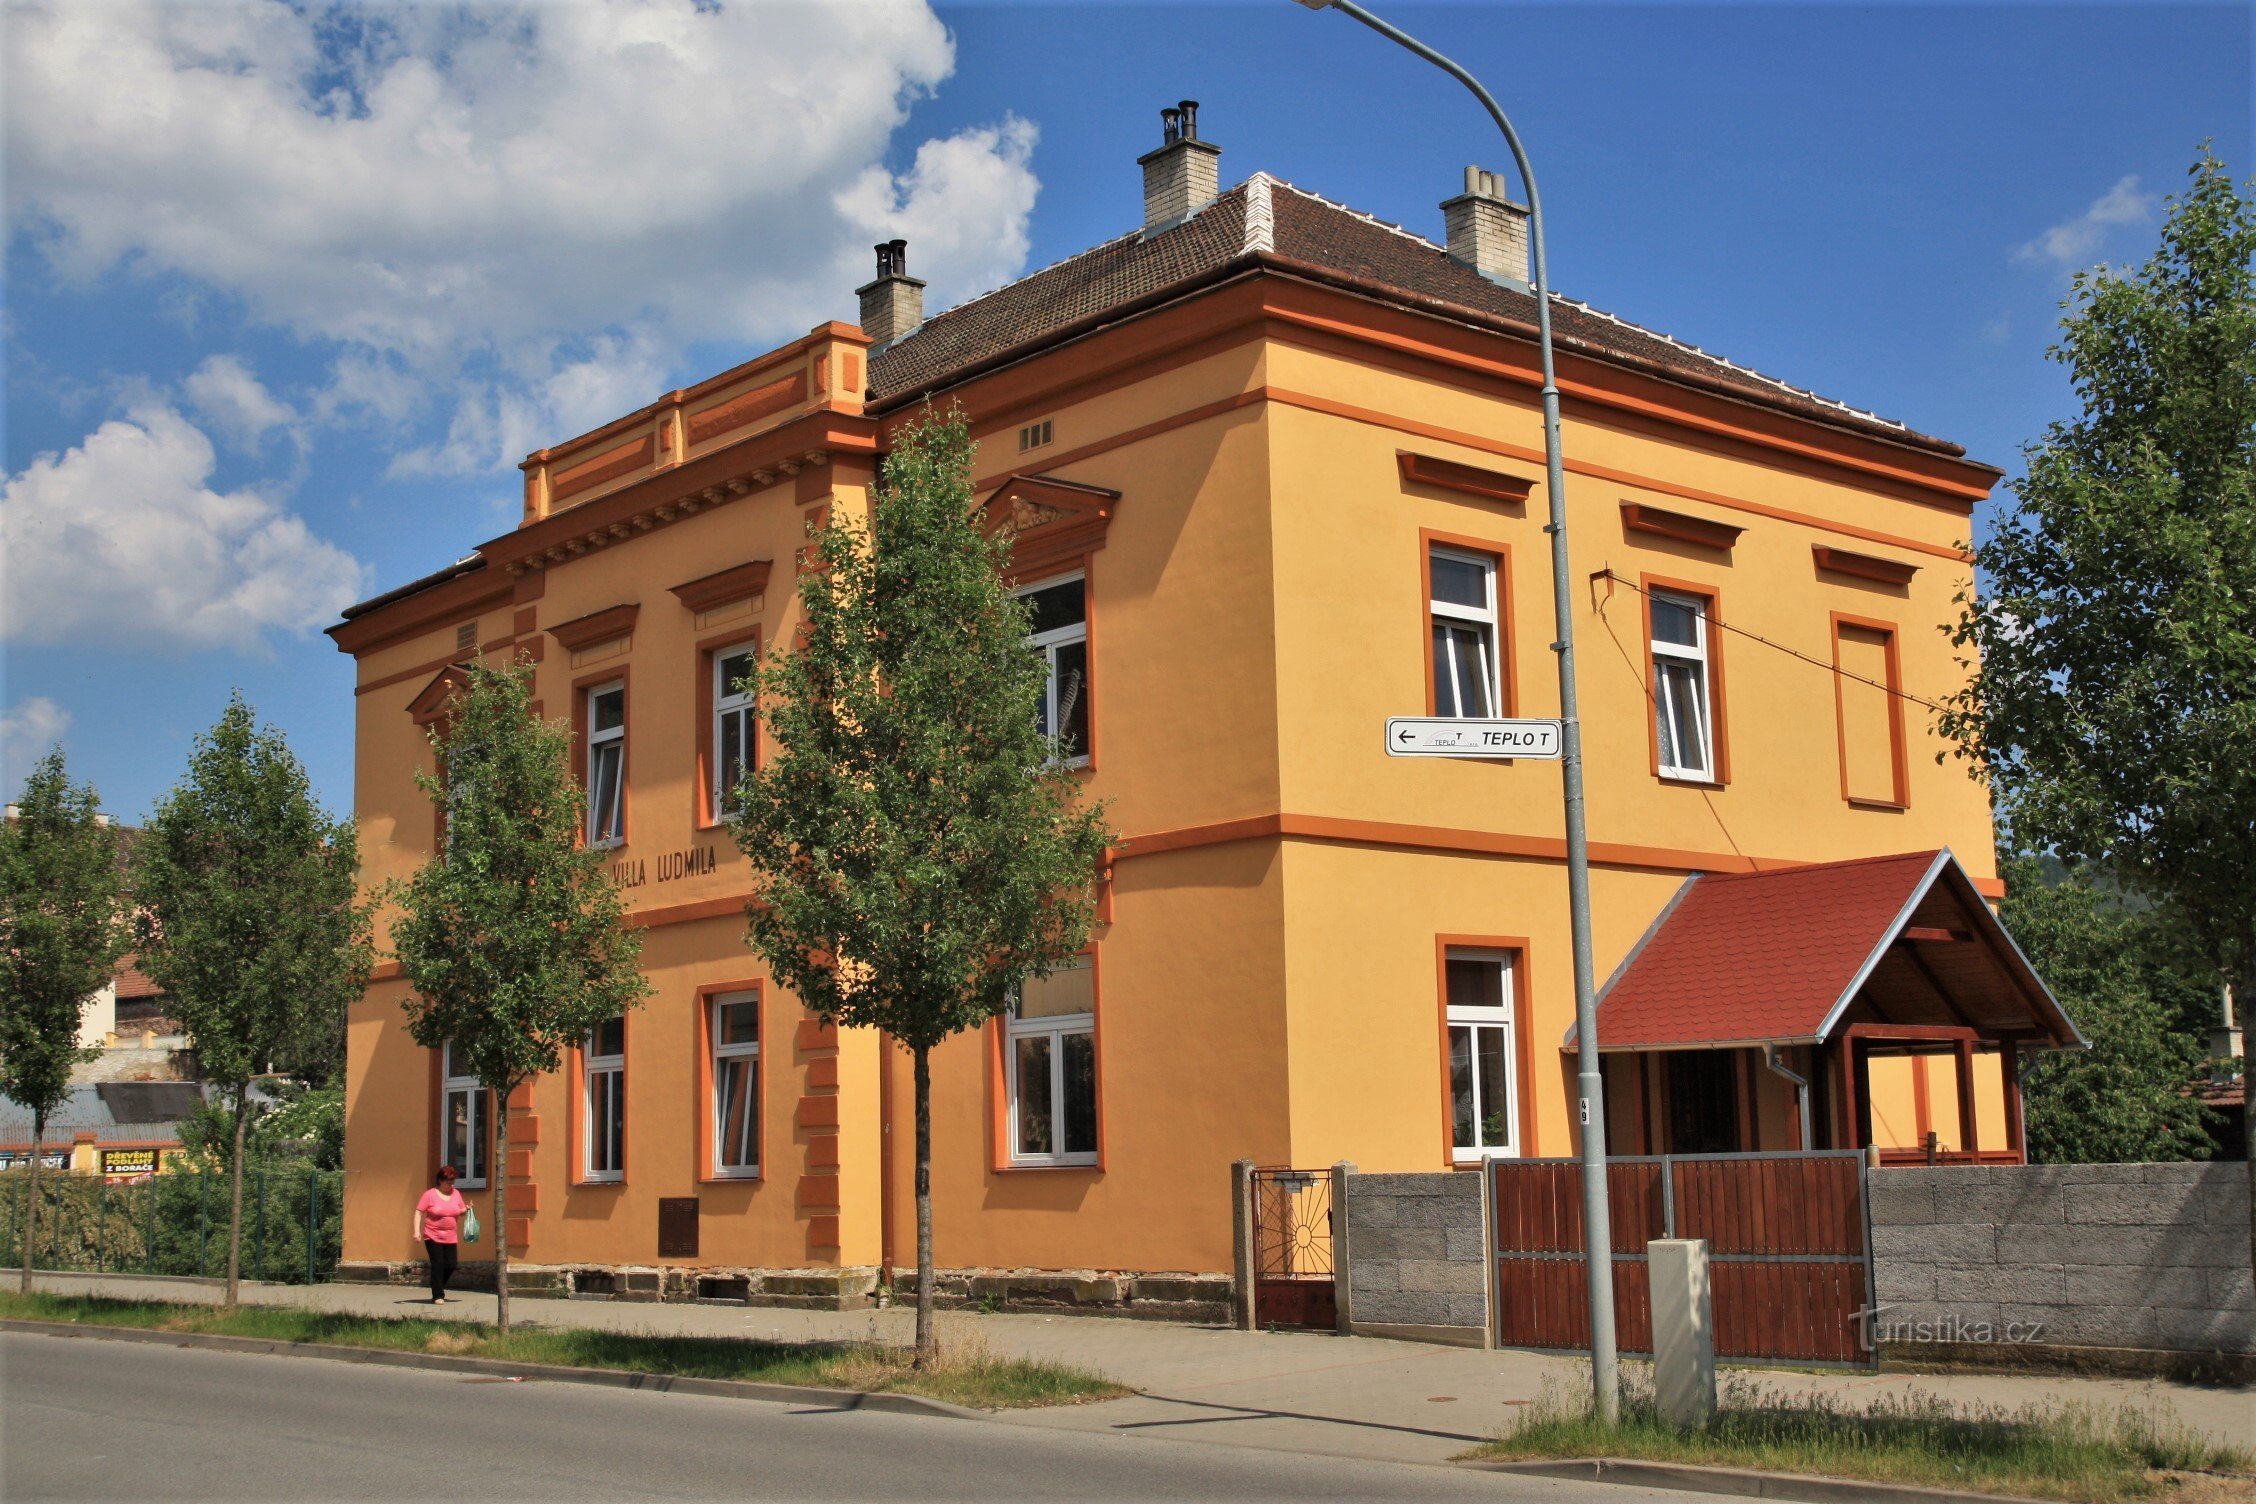 Villa Ludmila près de la gare